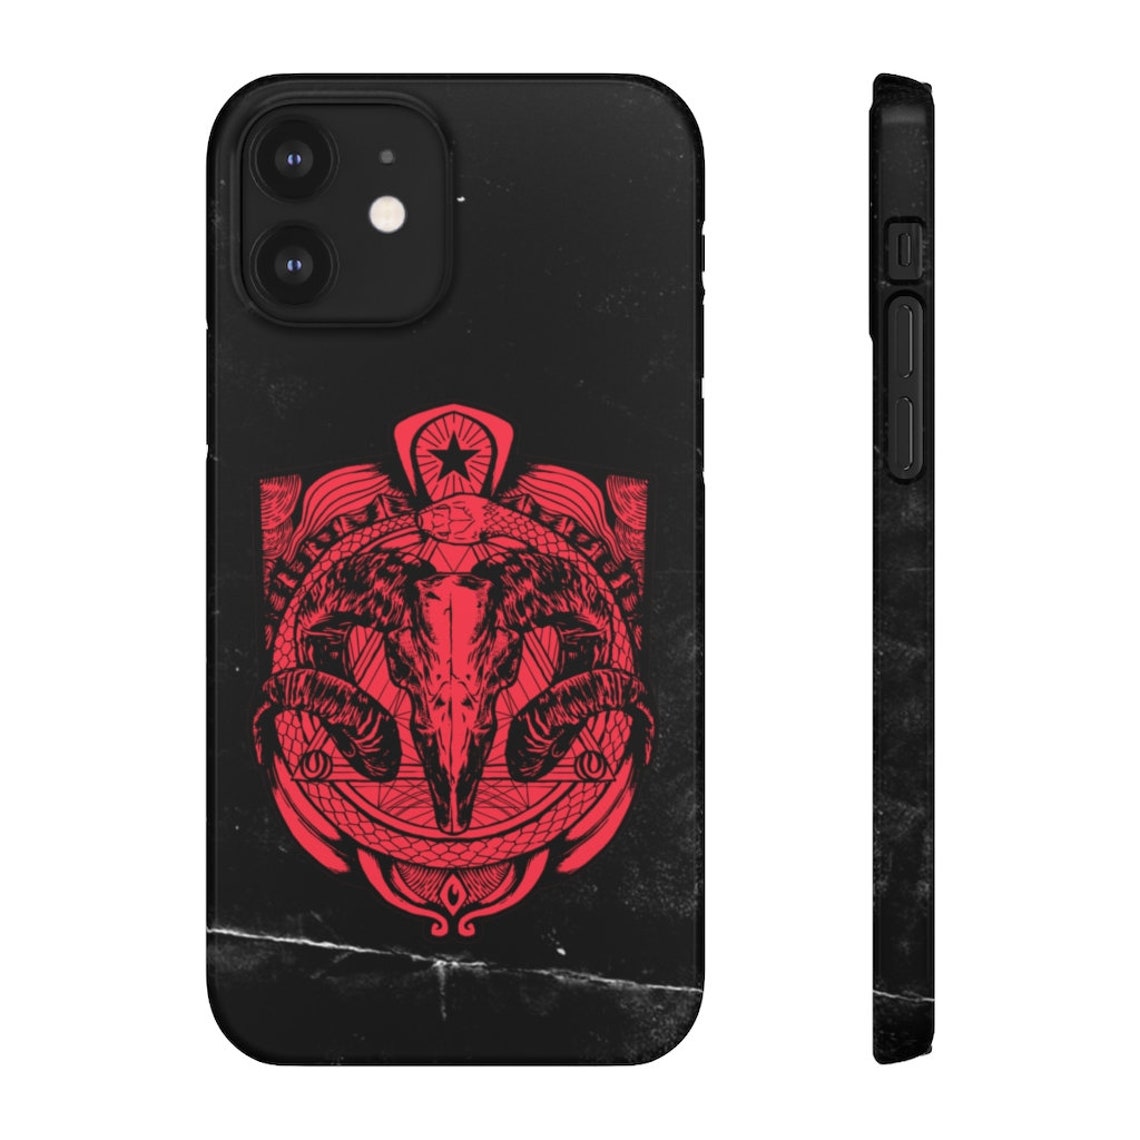 Satanic Gothic Phone Case iPhone/Samsung Galaxy Cases | Etsy